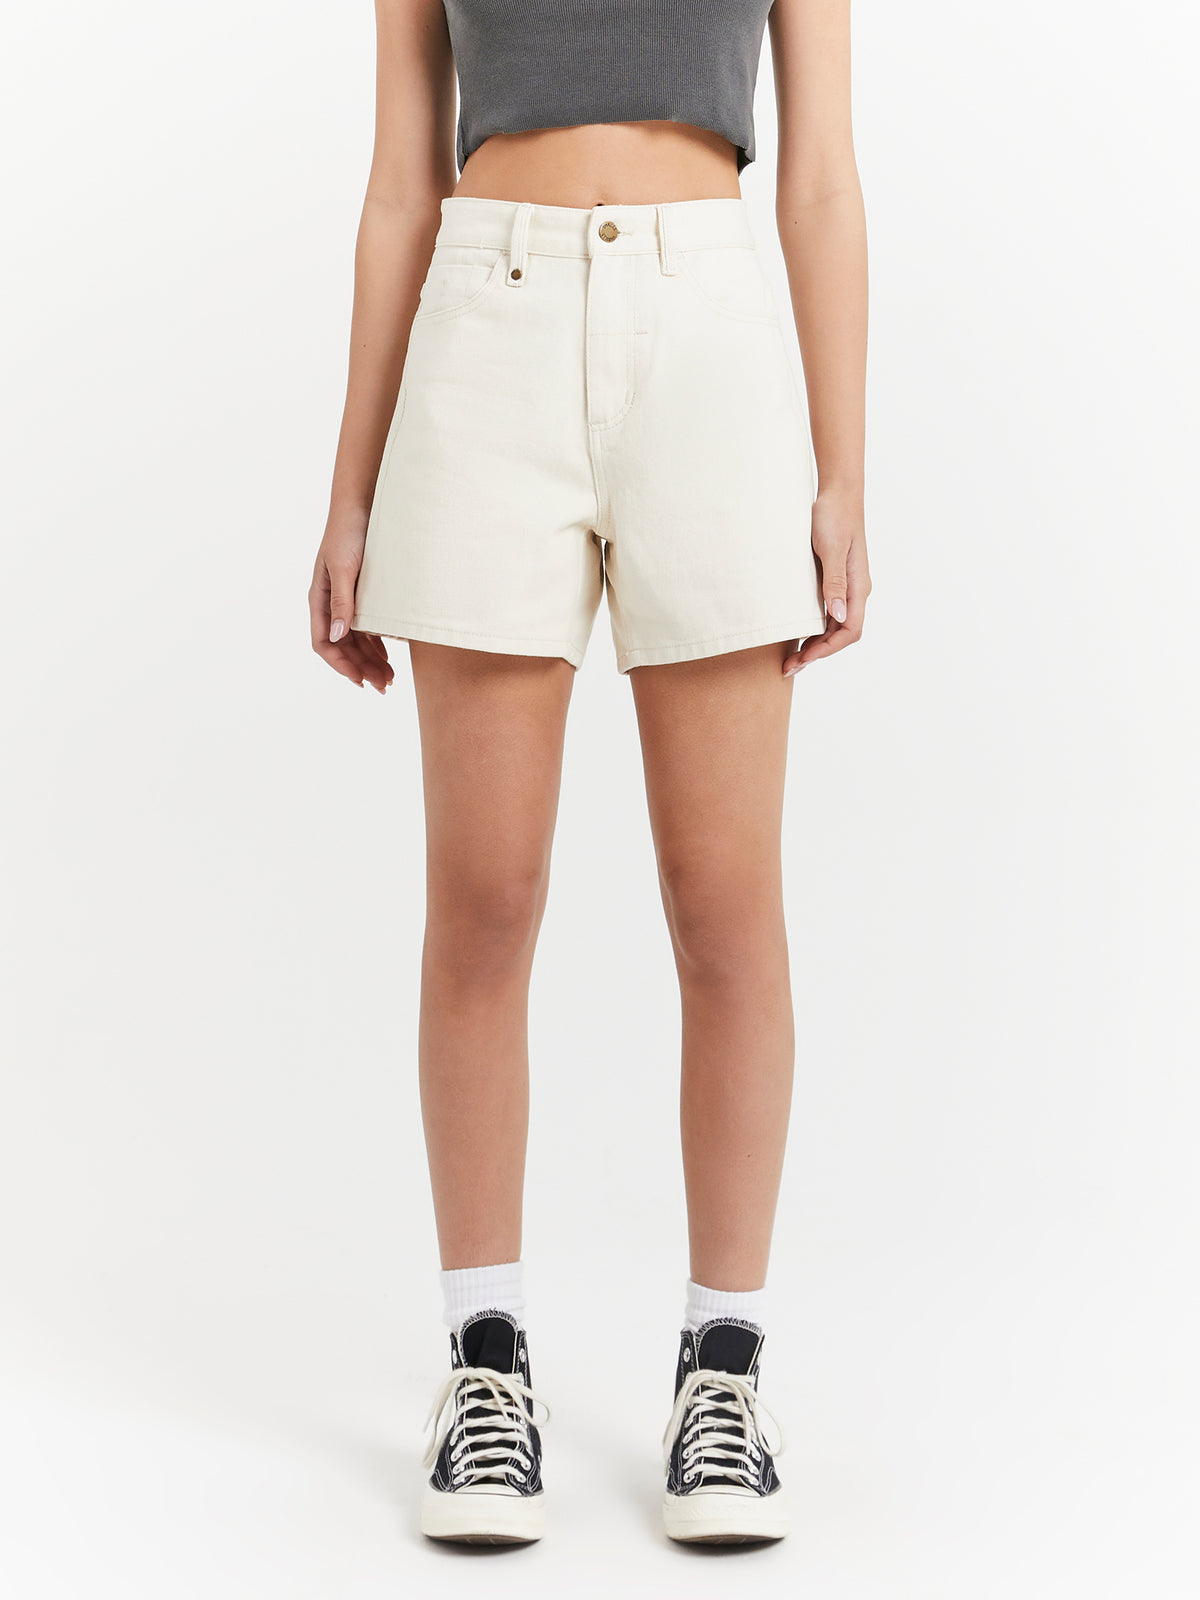 Khloe Shorts in Heritage White